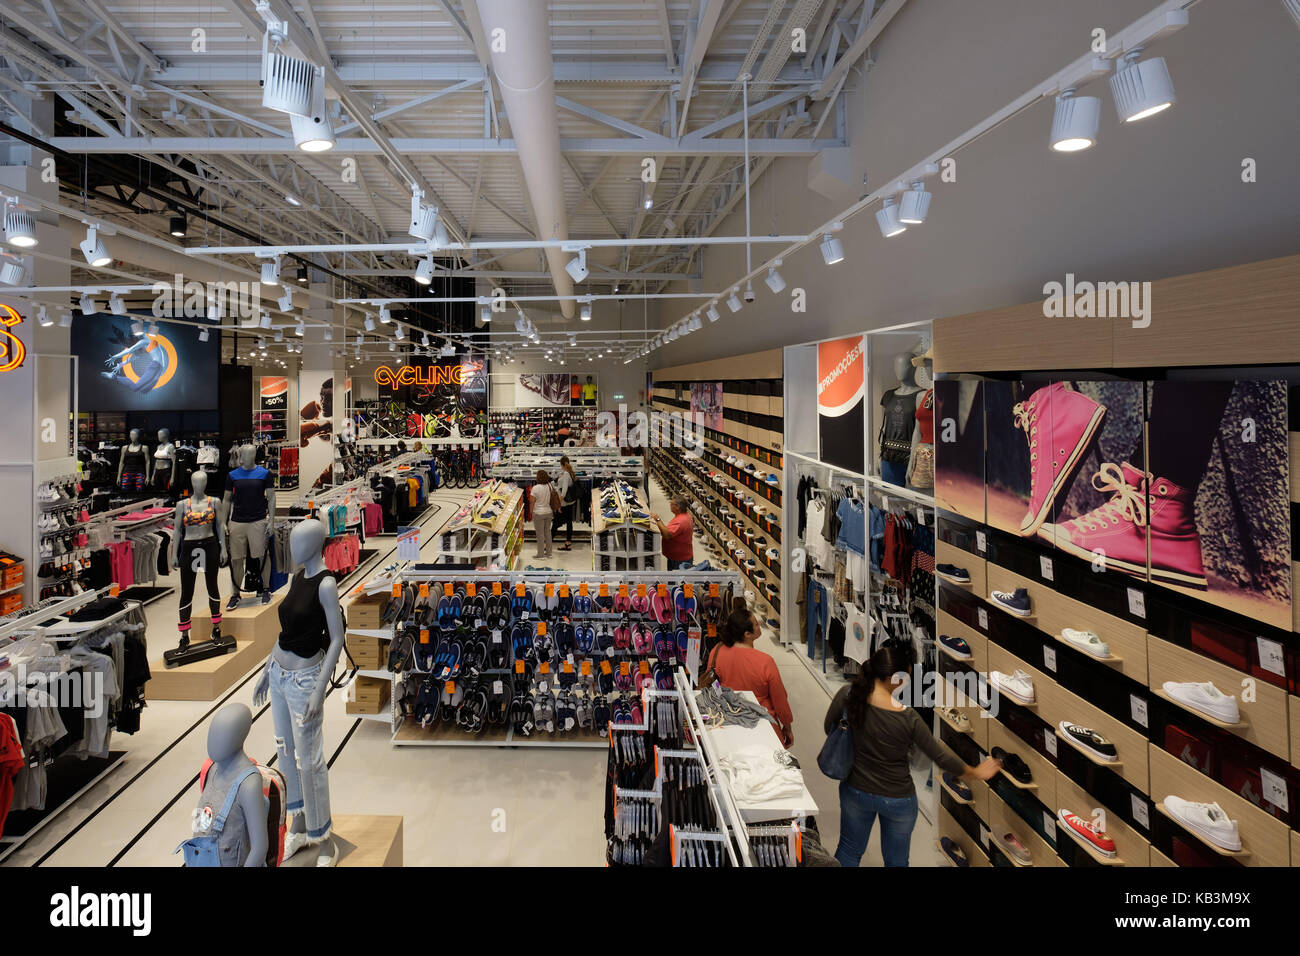 NBA Jerseys, Modell's Sporting Goods Store Interior, NYC Stock Photo - Alamy